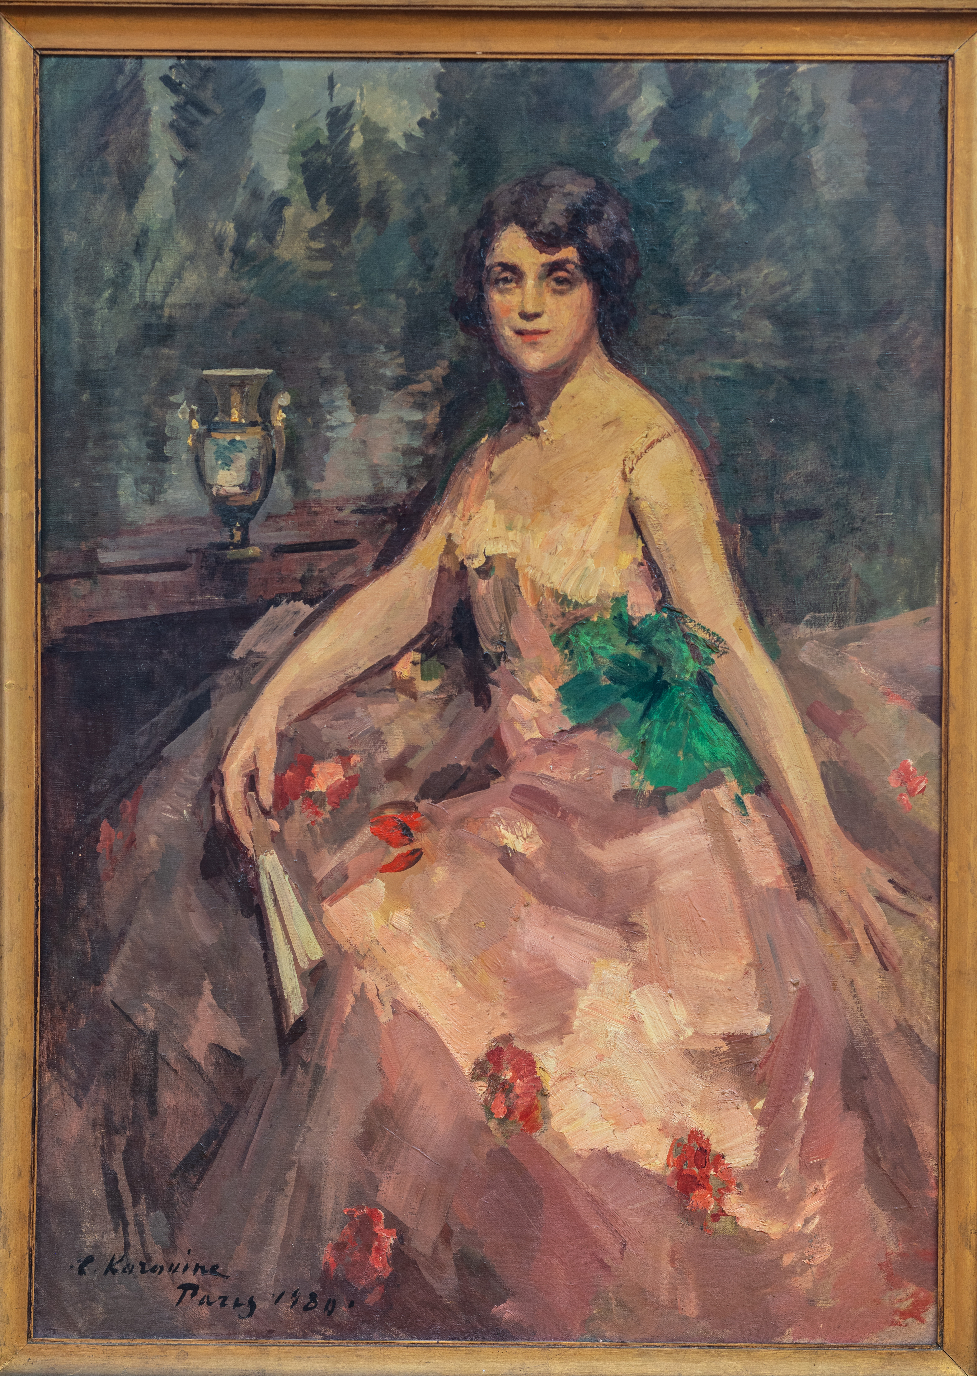 КОНСТАНТИН КОРОВИН (1861–1939)
Портрет Леди, 1930
Холст, масло, 115 x 81 см